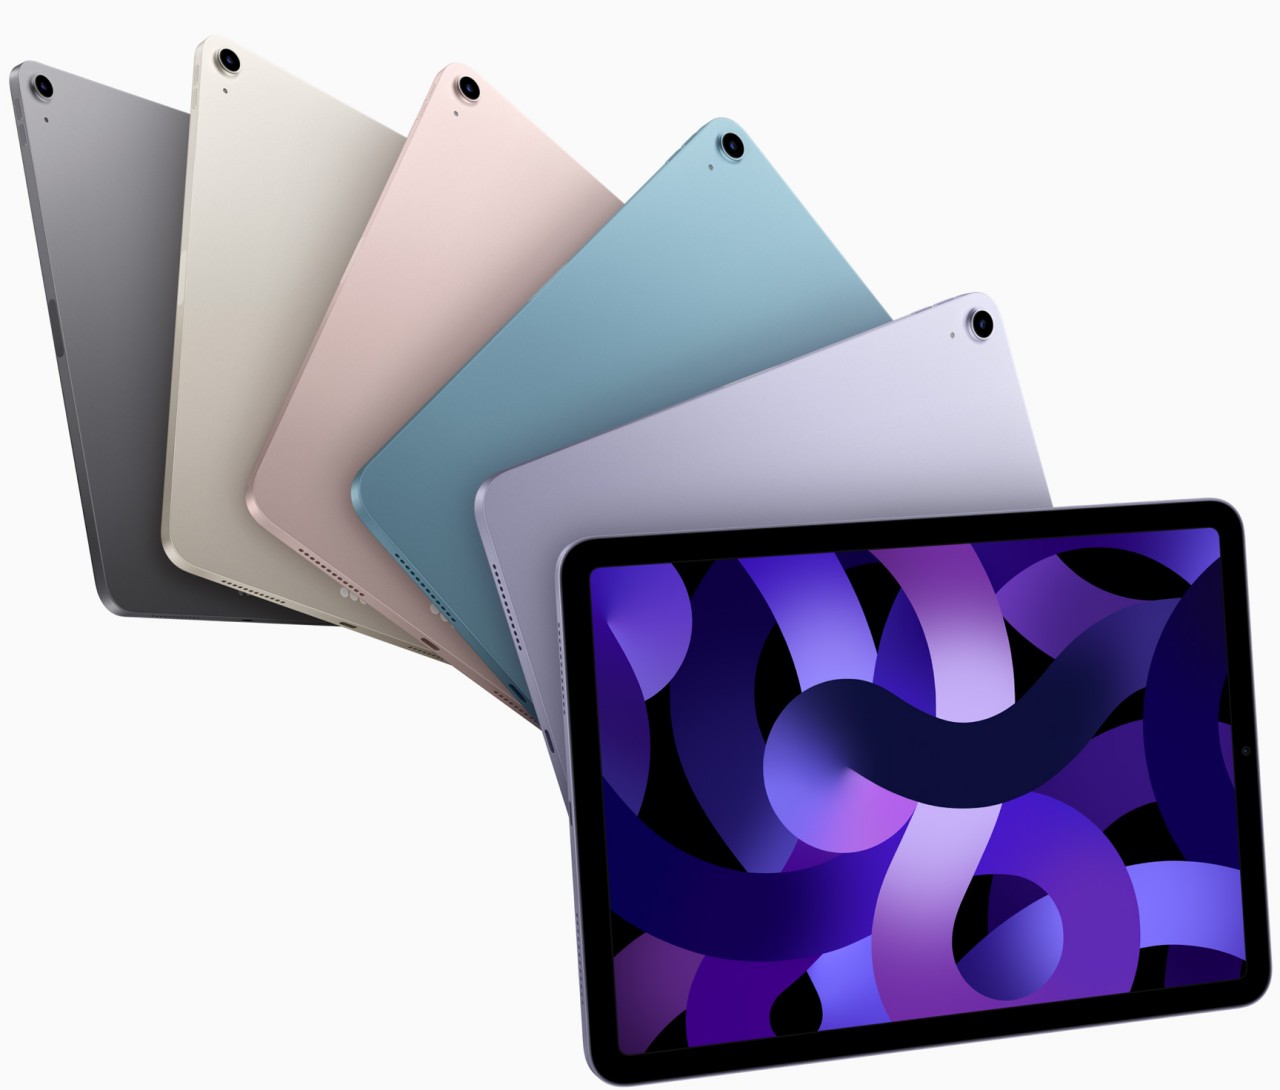 Apple's iPad Evolution: Introducing the 12.9-inch iPad Air